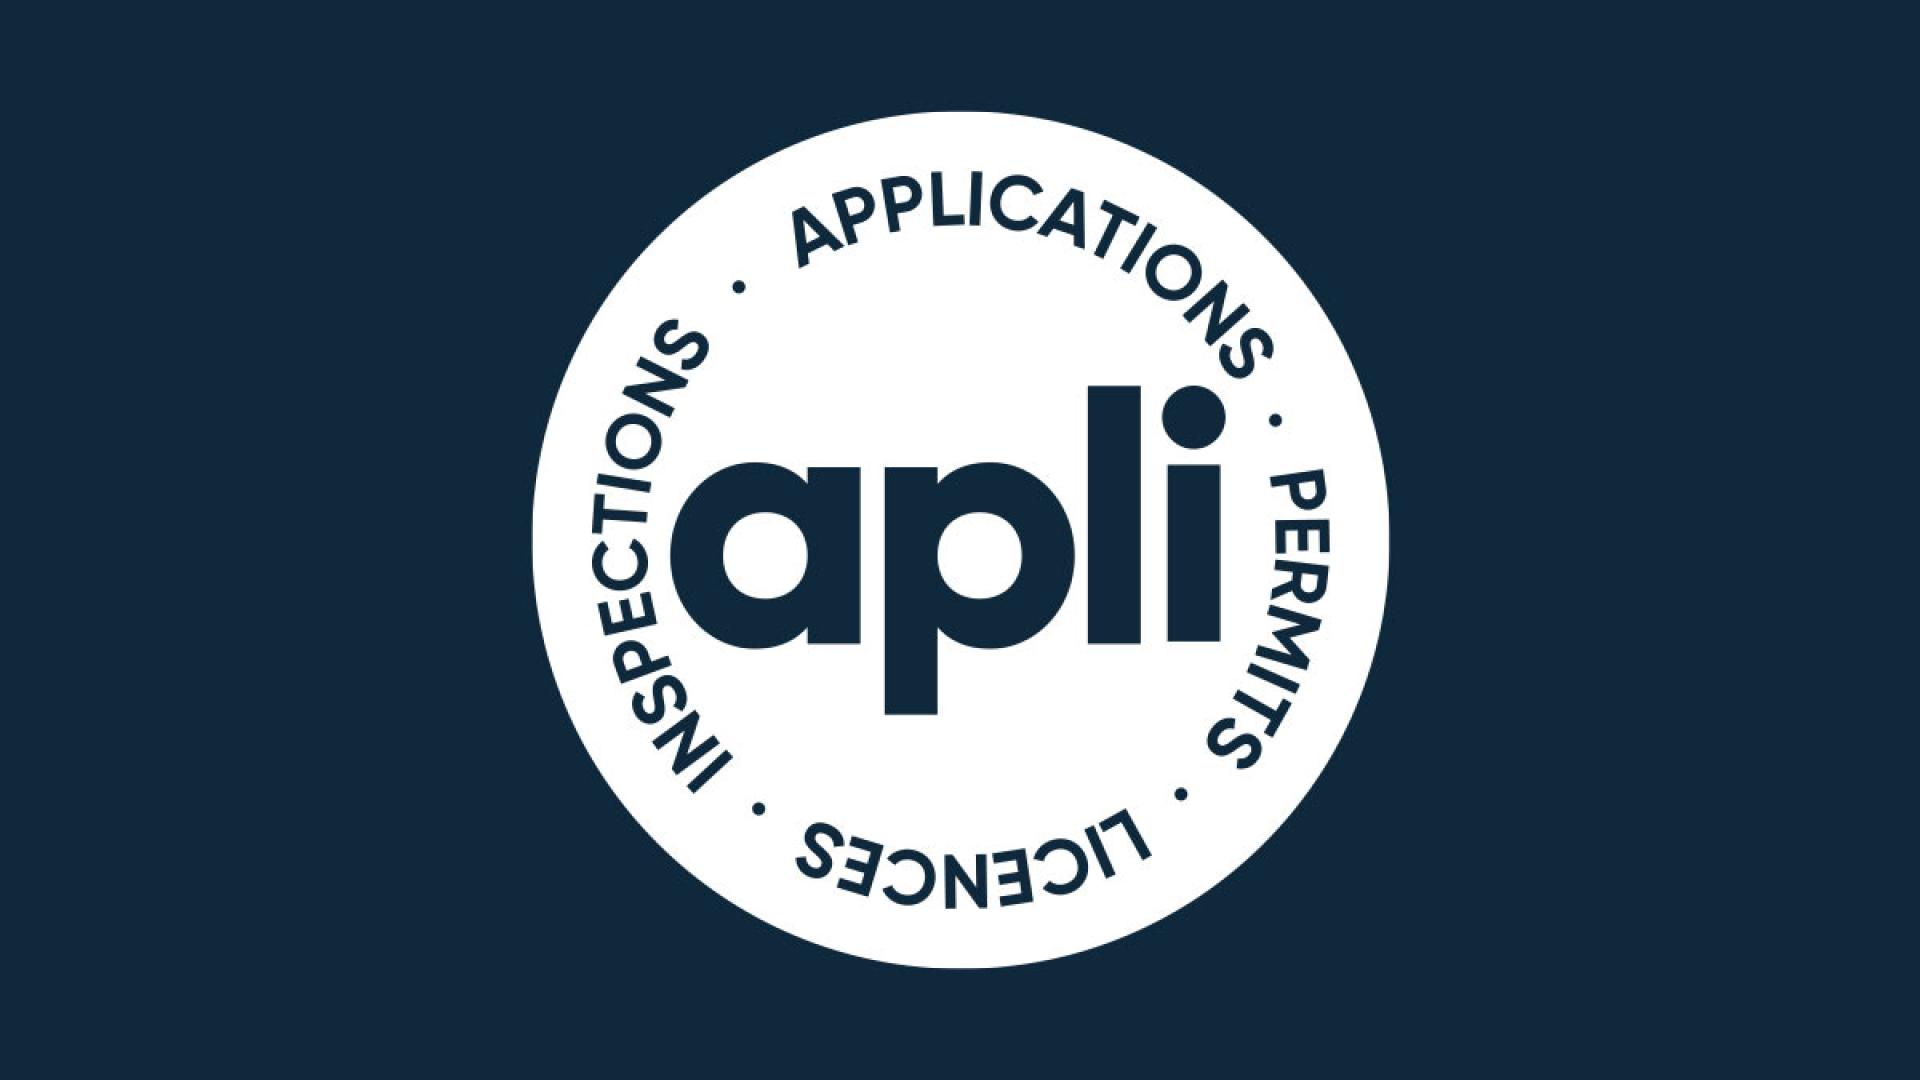 APLI logo